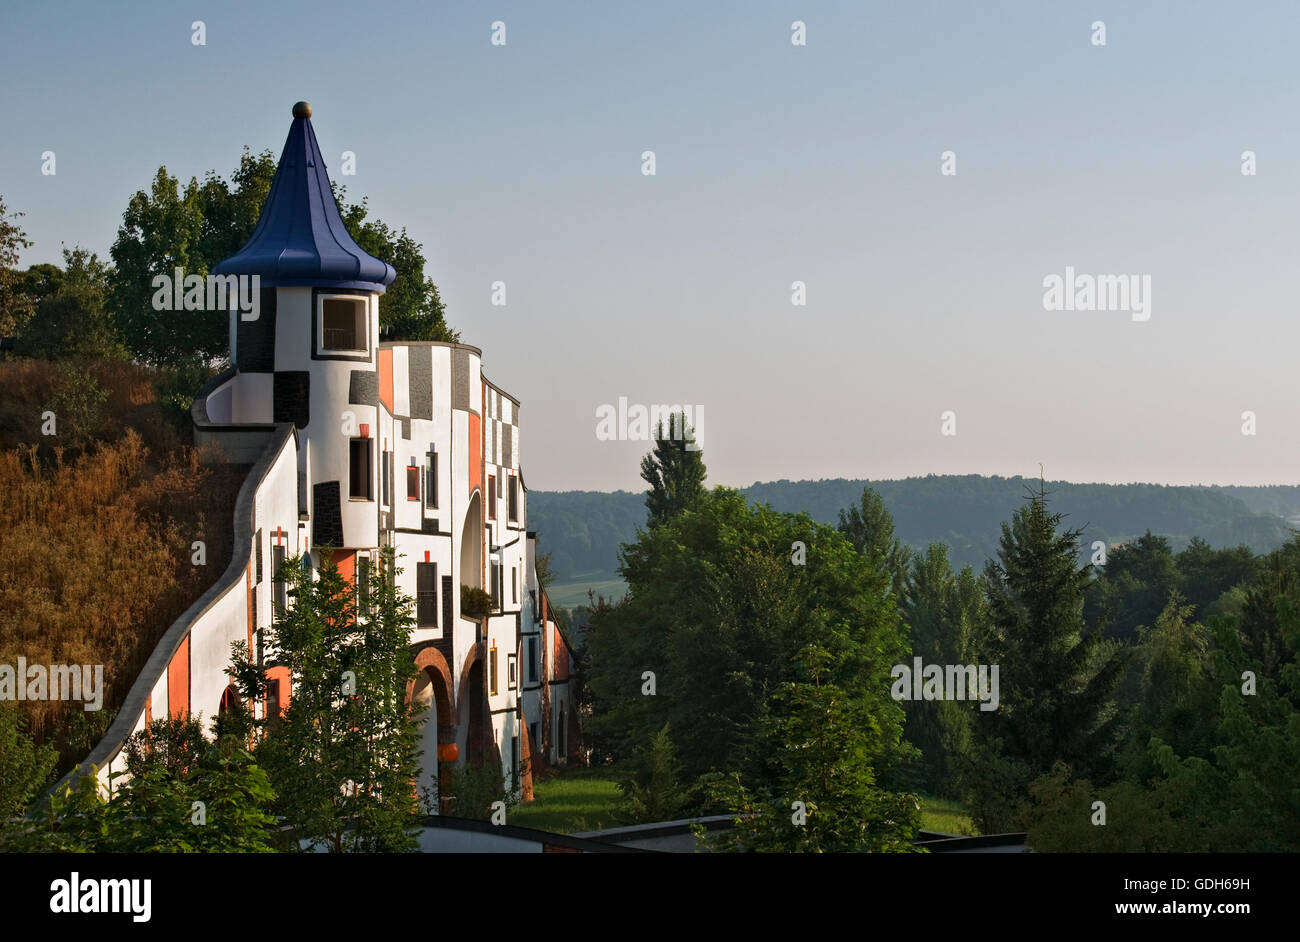 Kunsthaus, Art House of the Rogner Bad Blumau hotel complex, designed by architect Friedensreich Hundertwasser Stock Photo